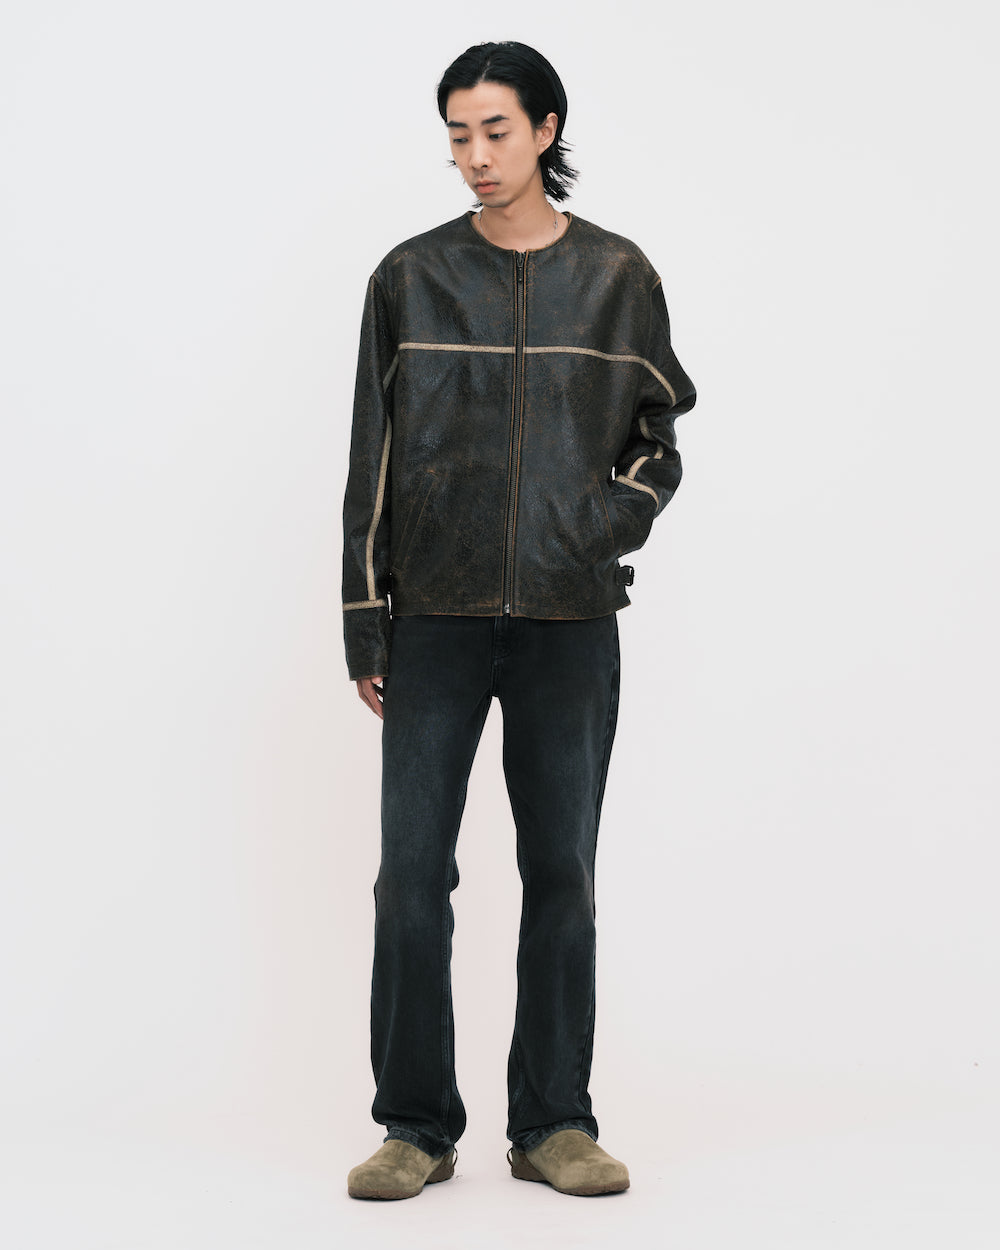 Gusa Crackle Leather Jacket